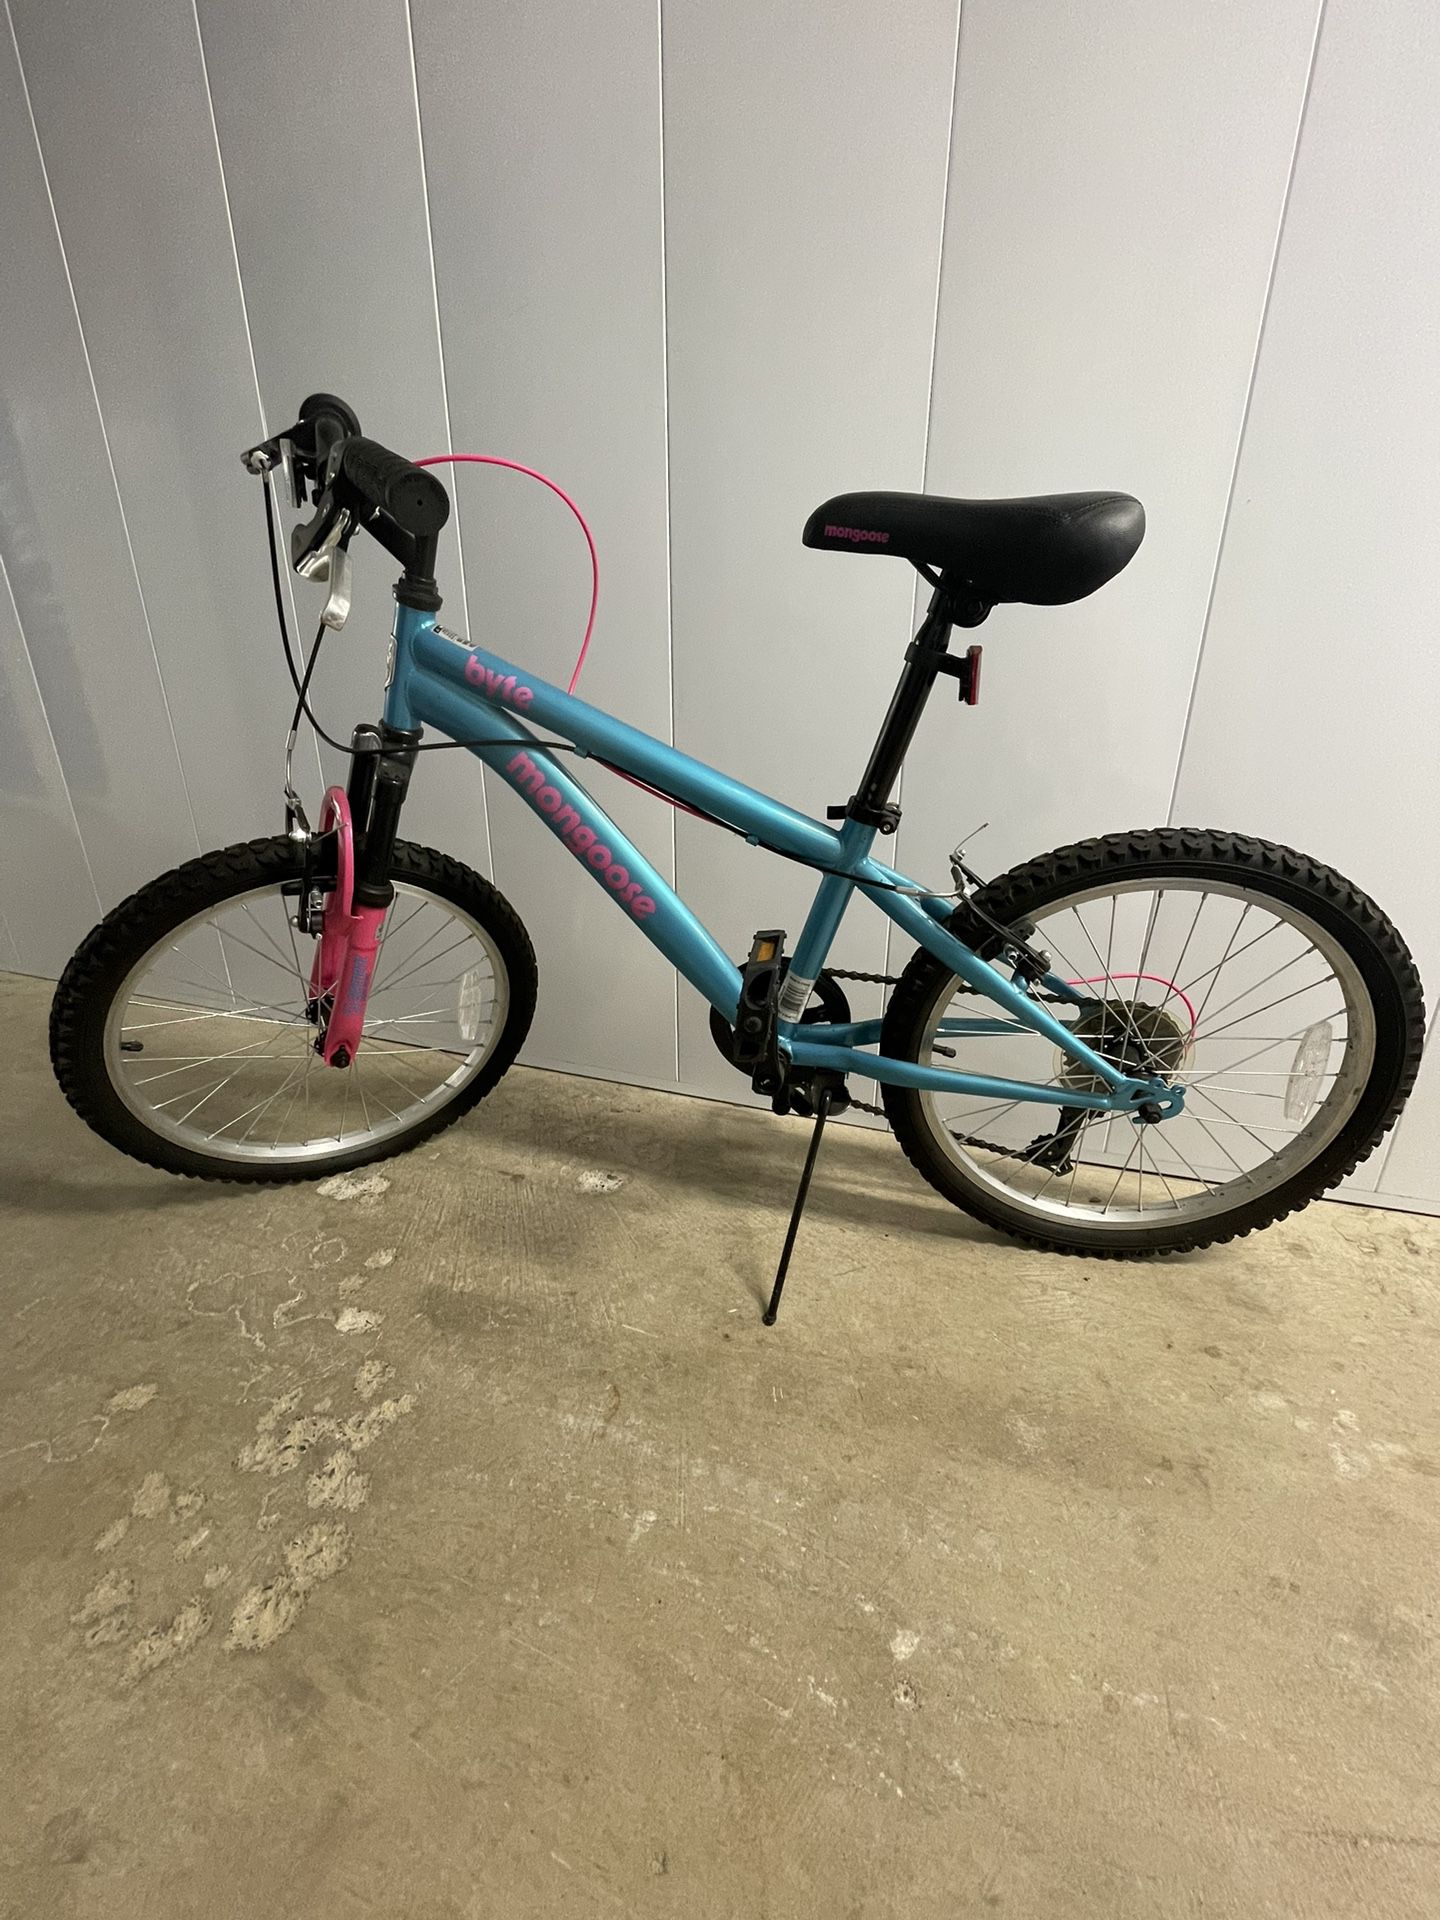 Kids pink and blue mongoose bike